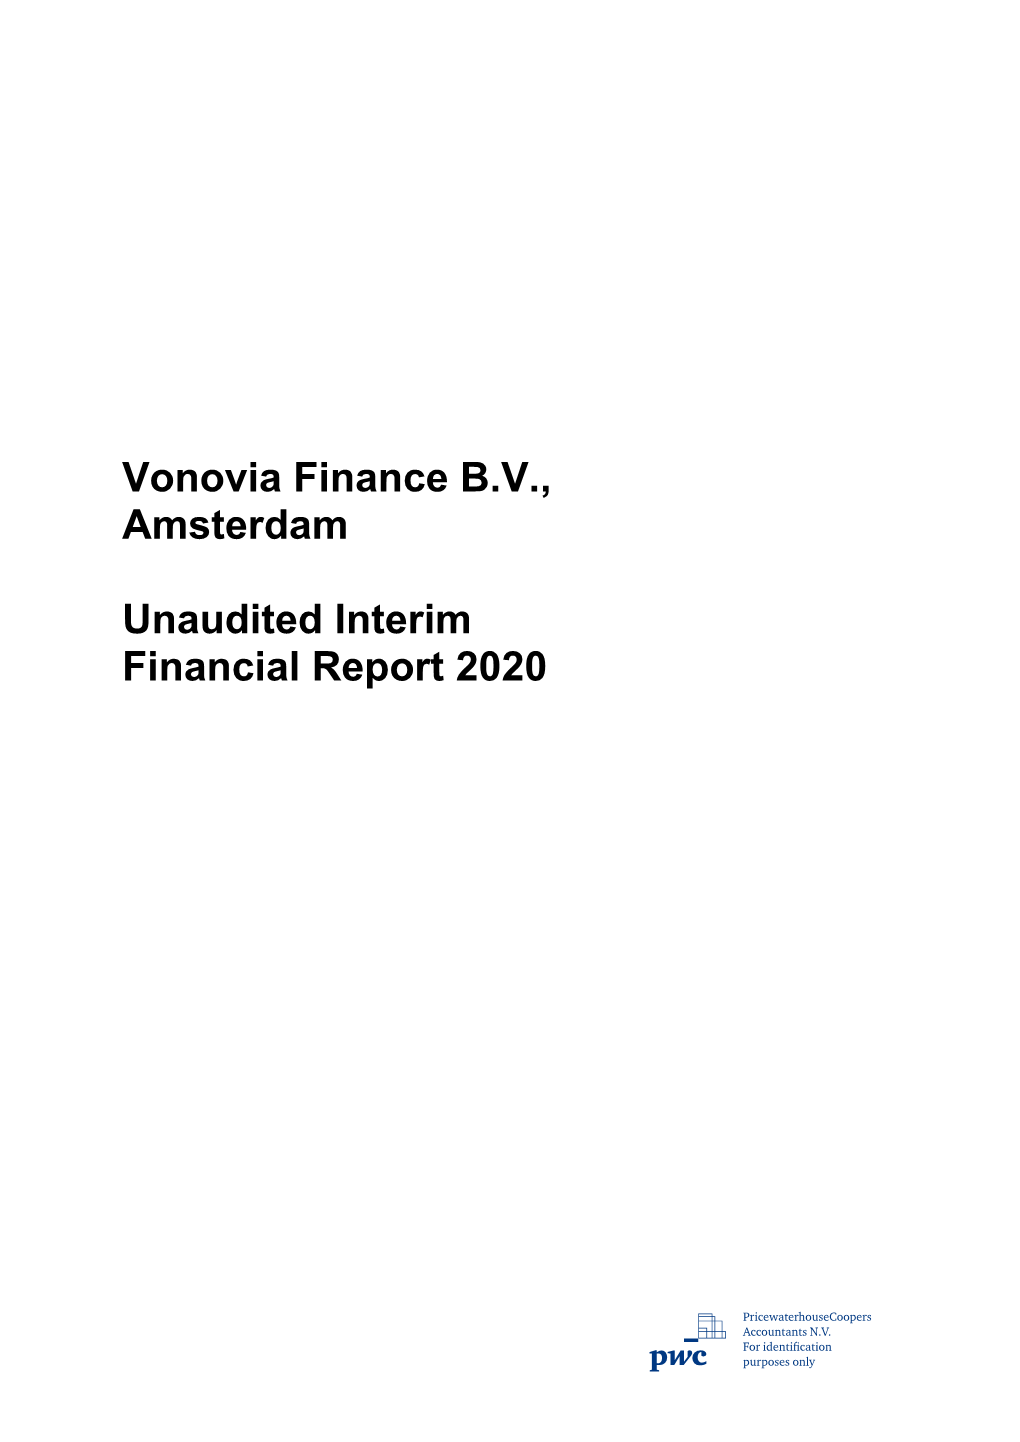 Vonovia Finance B.V., Amsterdam Unaudited Interim Financial Report